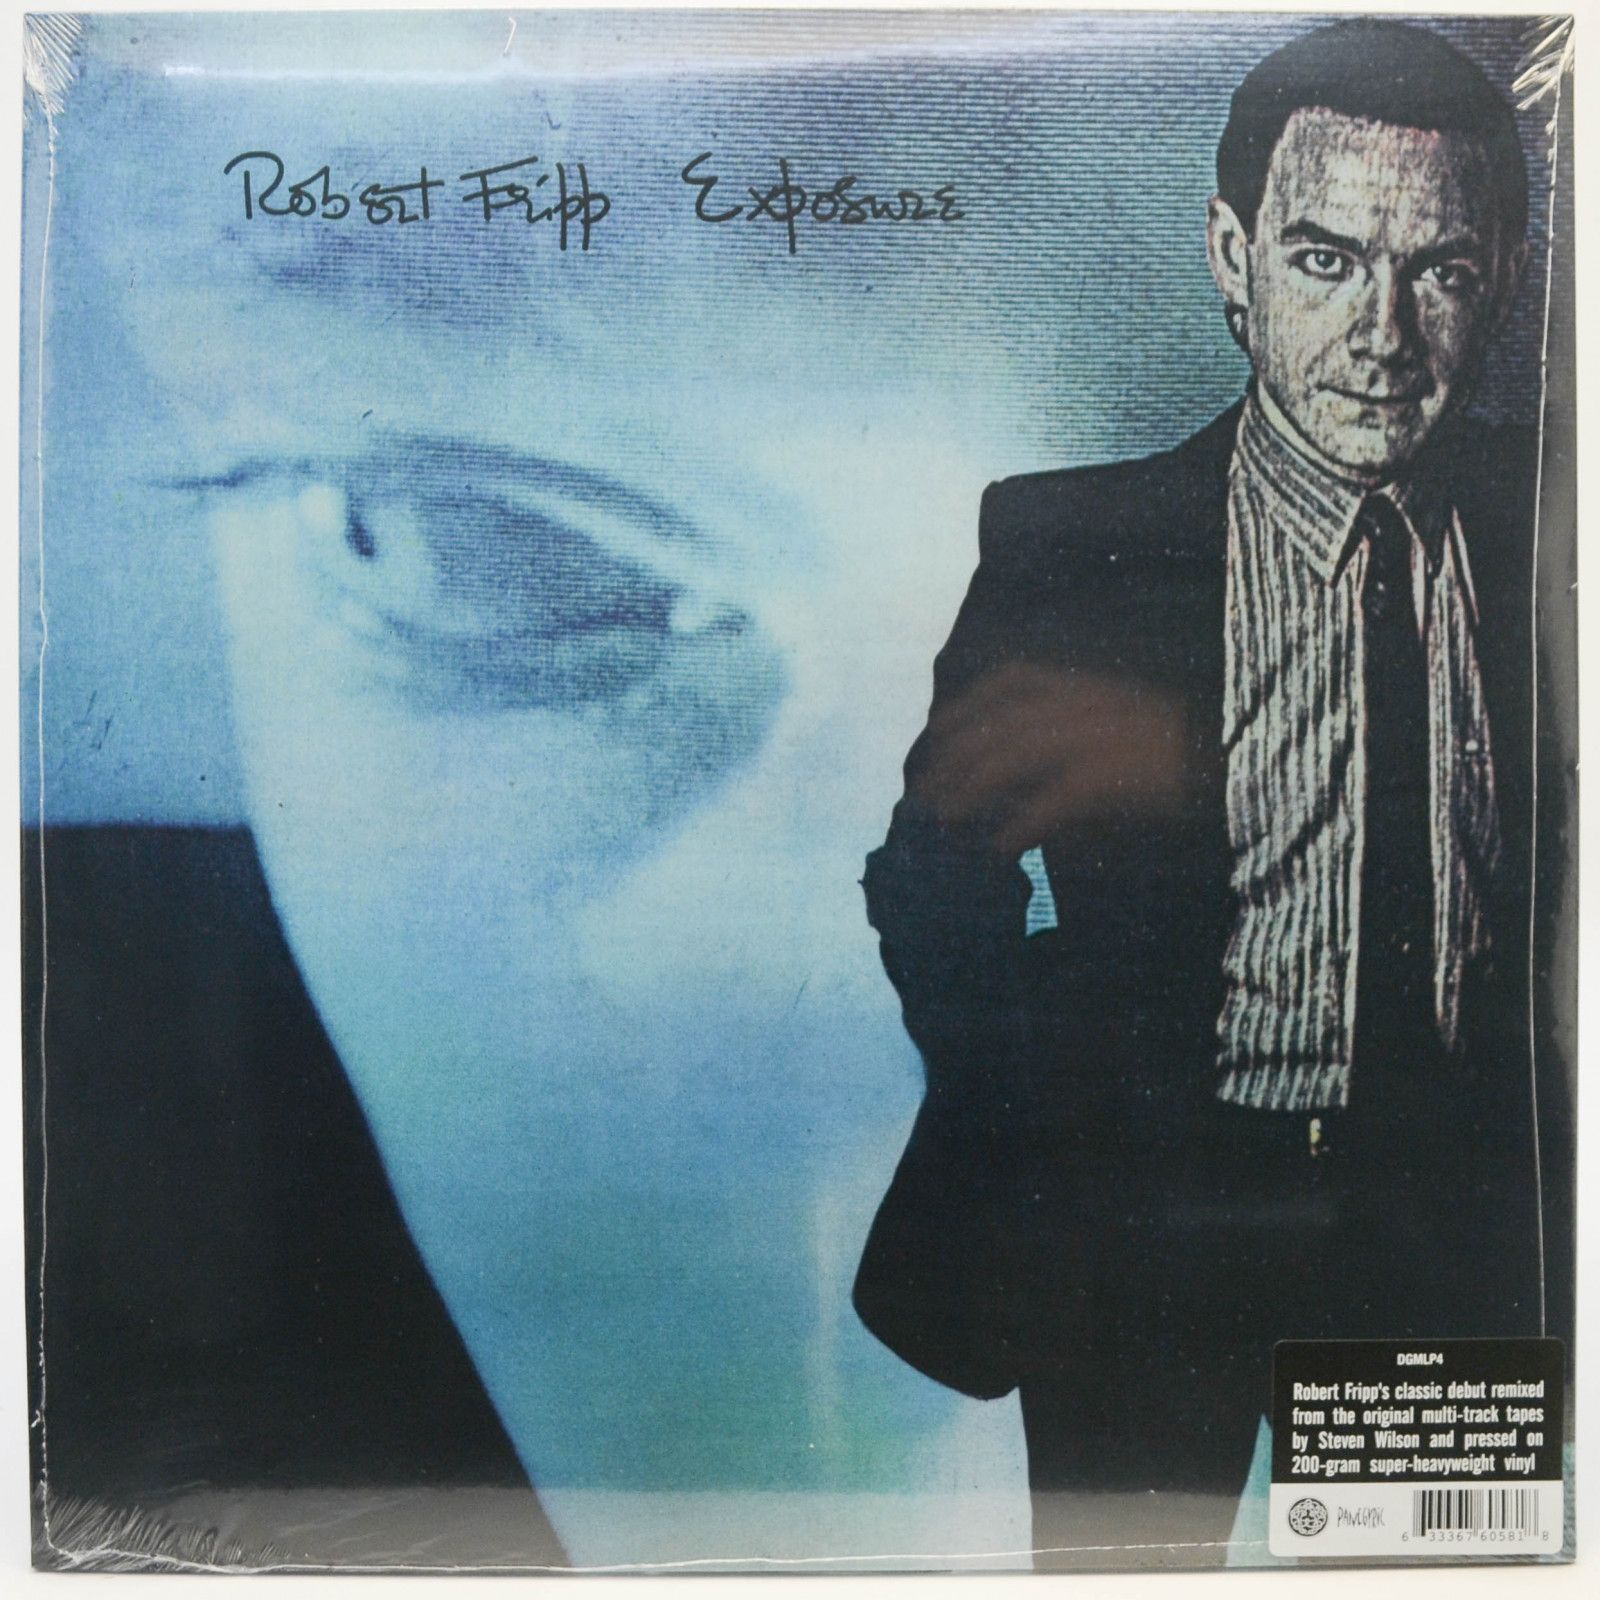 Robert Fripp — Exposure (UK), 1979